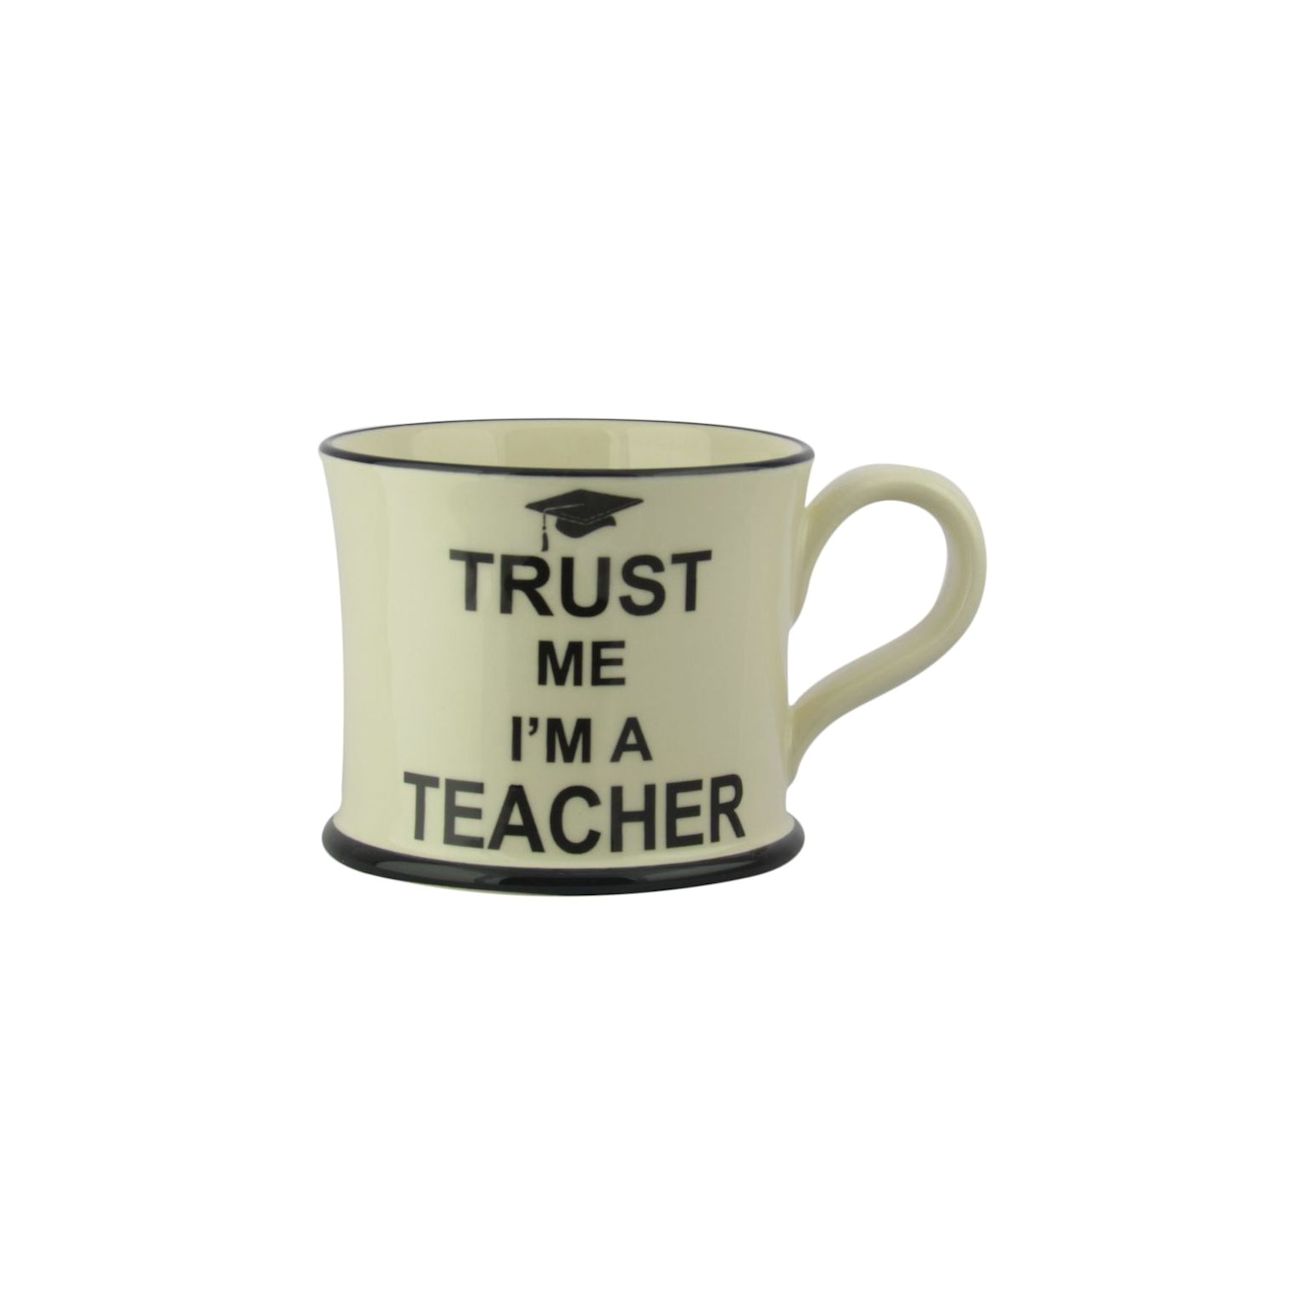 Trust Me I'm A Teacher Mug Exclusive Fine China 12 oz Cup Hand Decorated in UK 